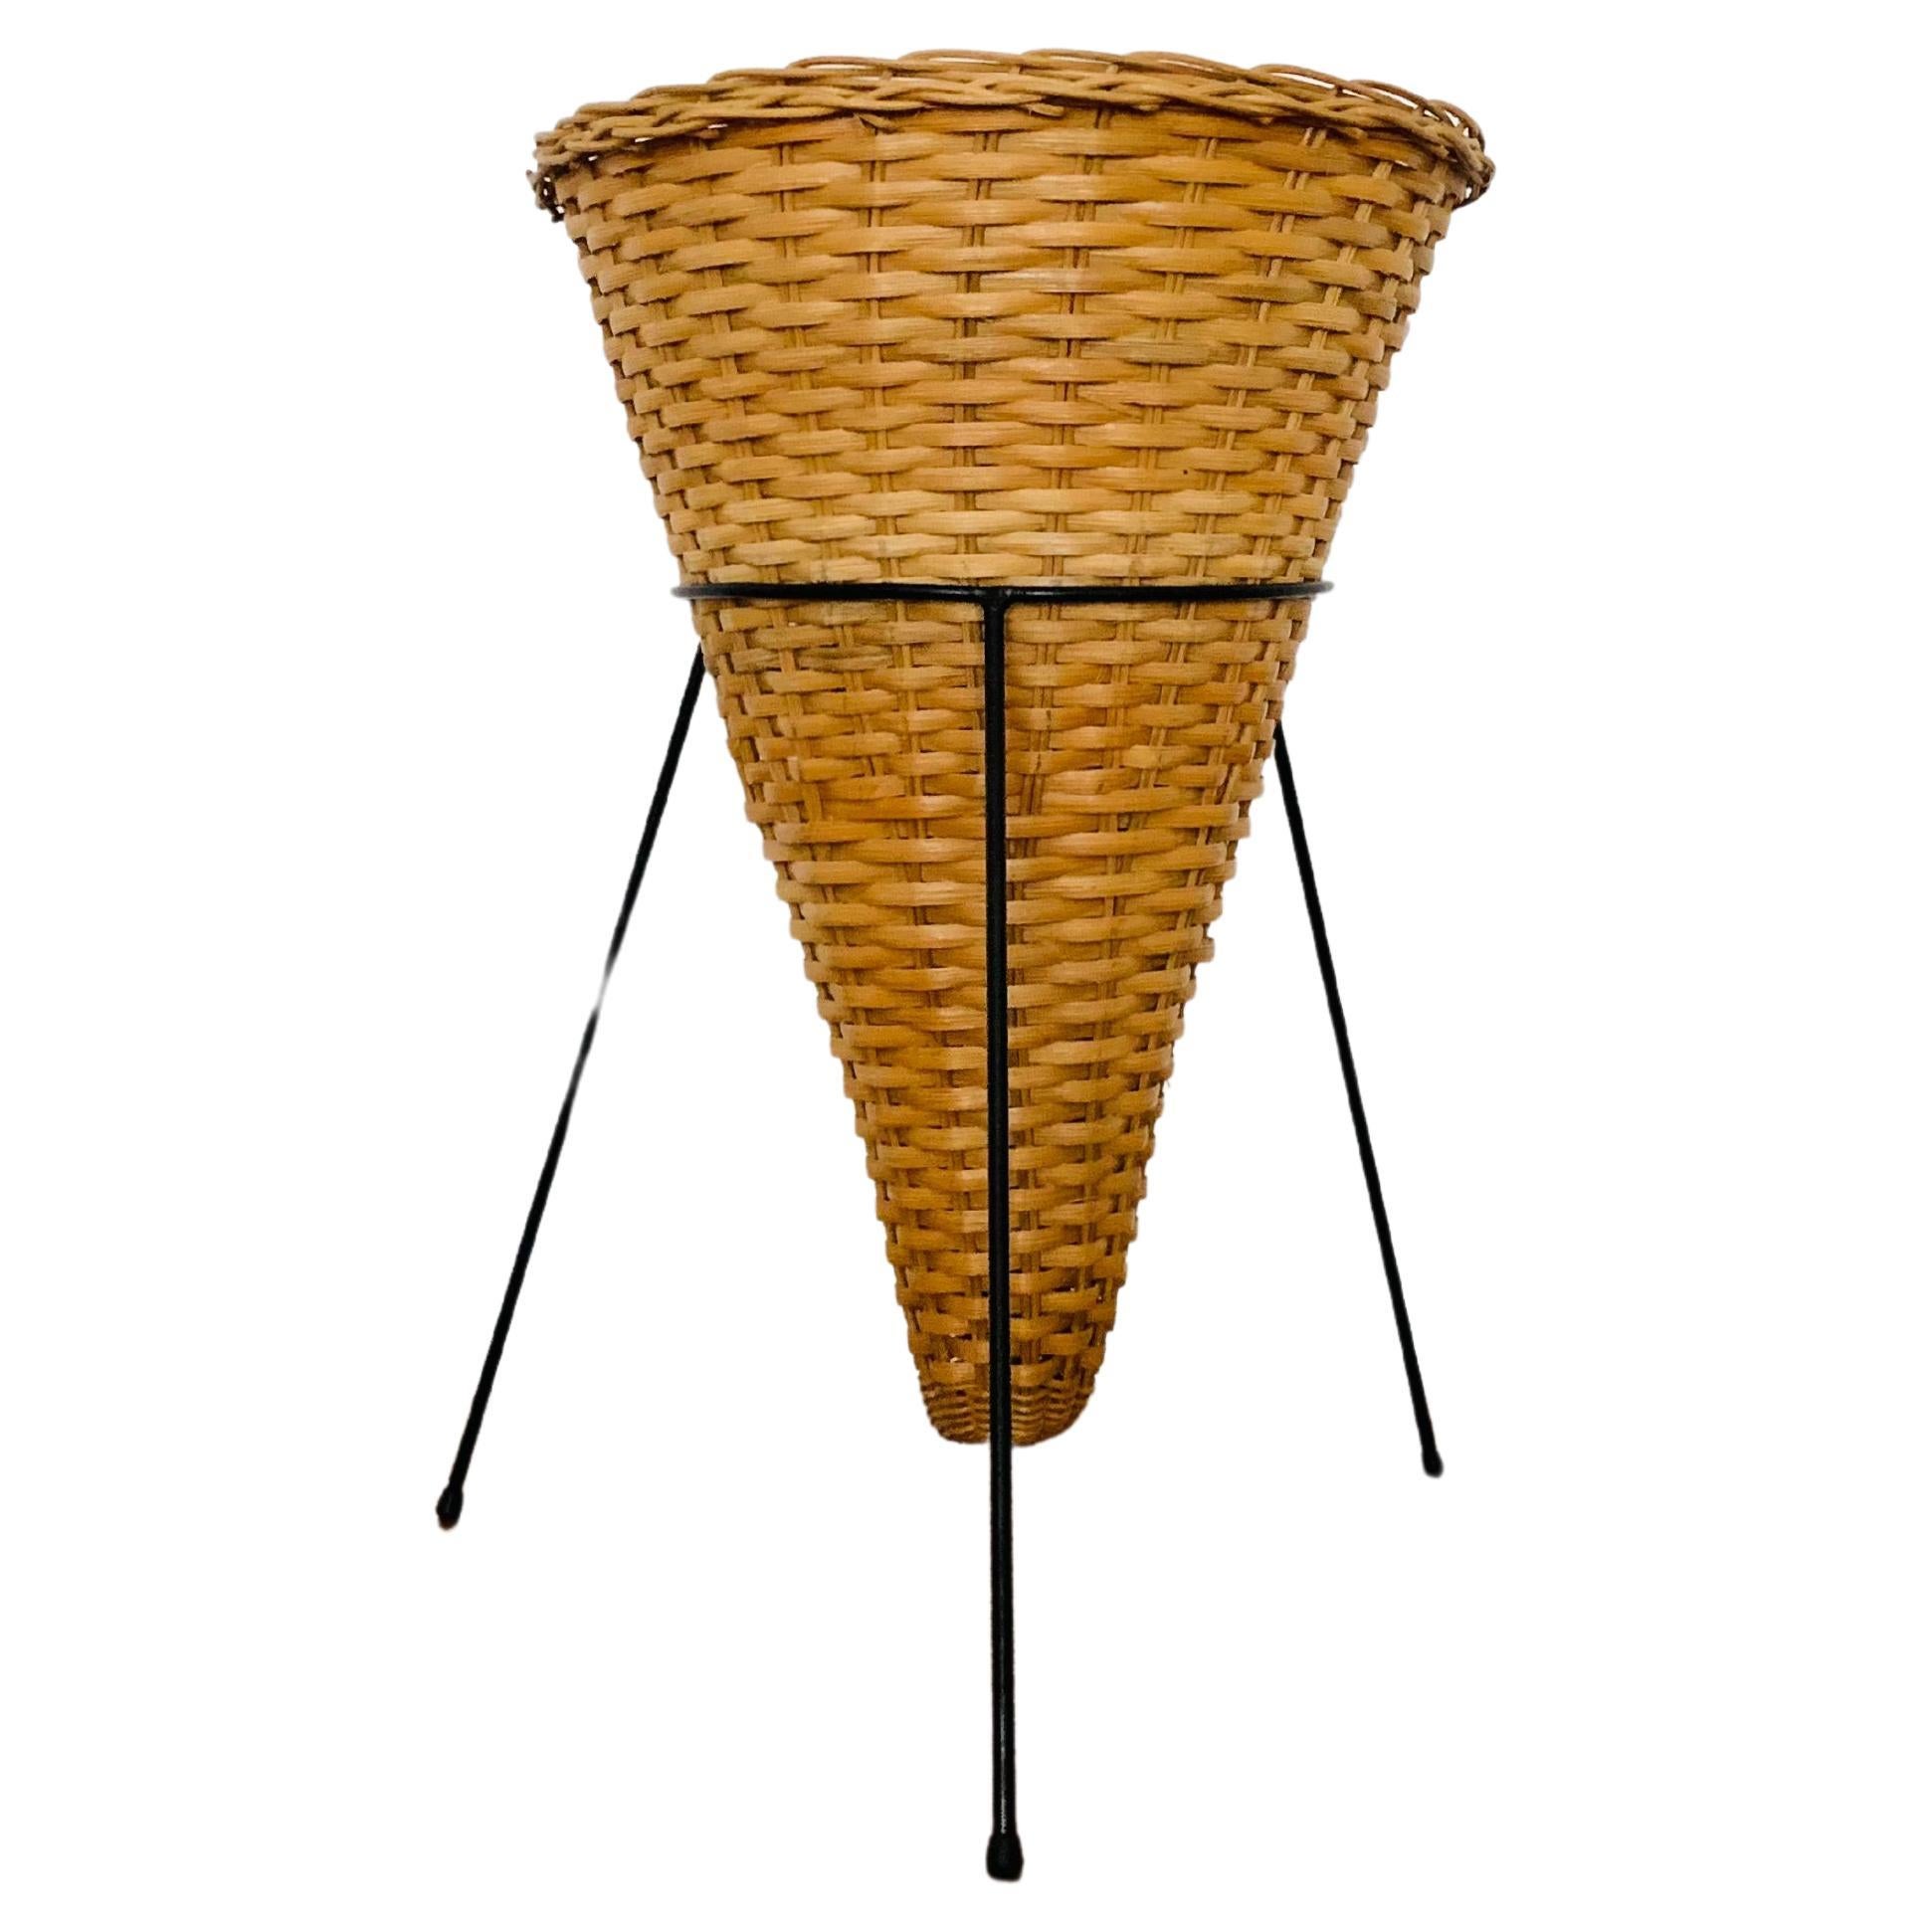 Wastepaper Basket or Wicker Planter